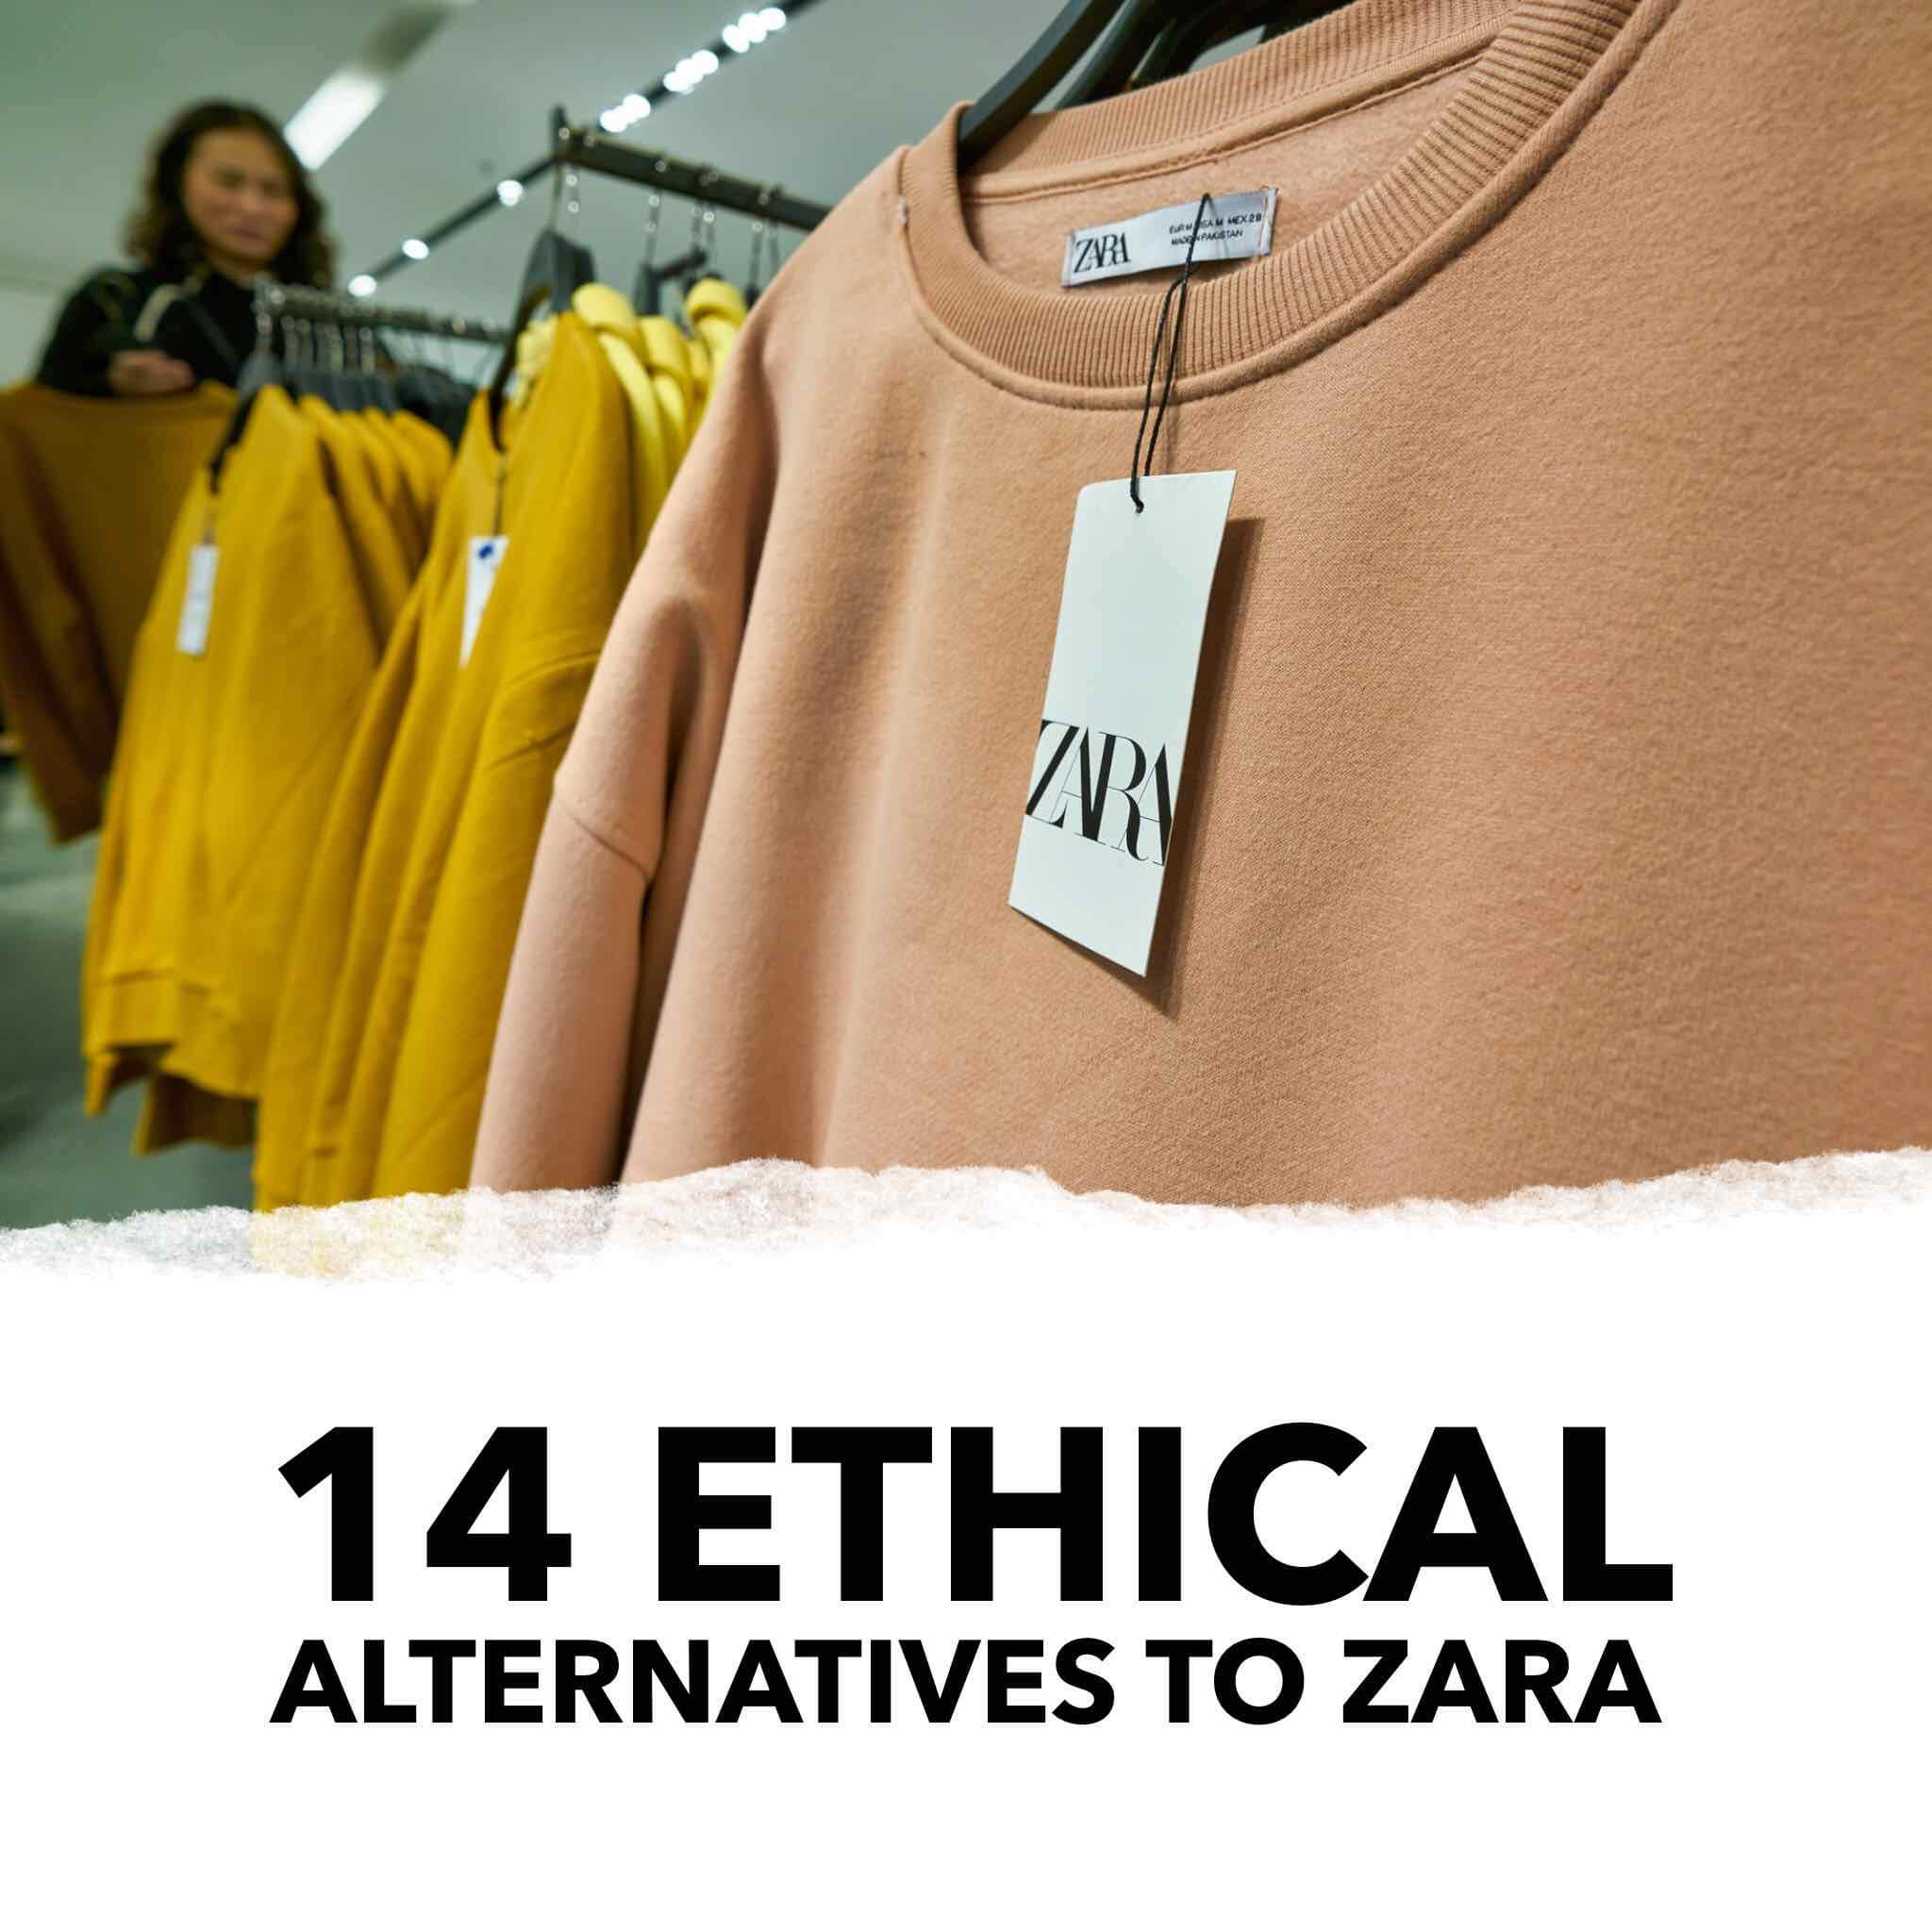 14 ethical alternatives to zara